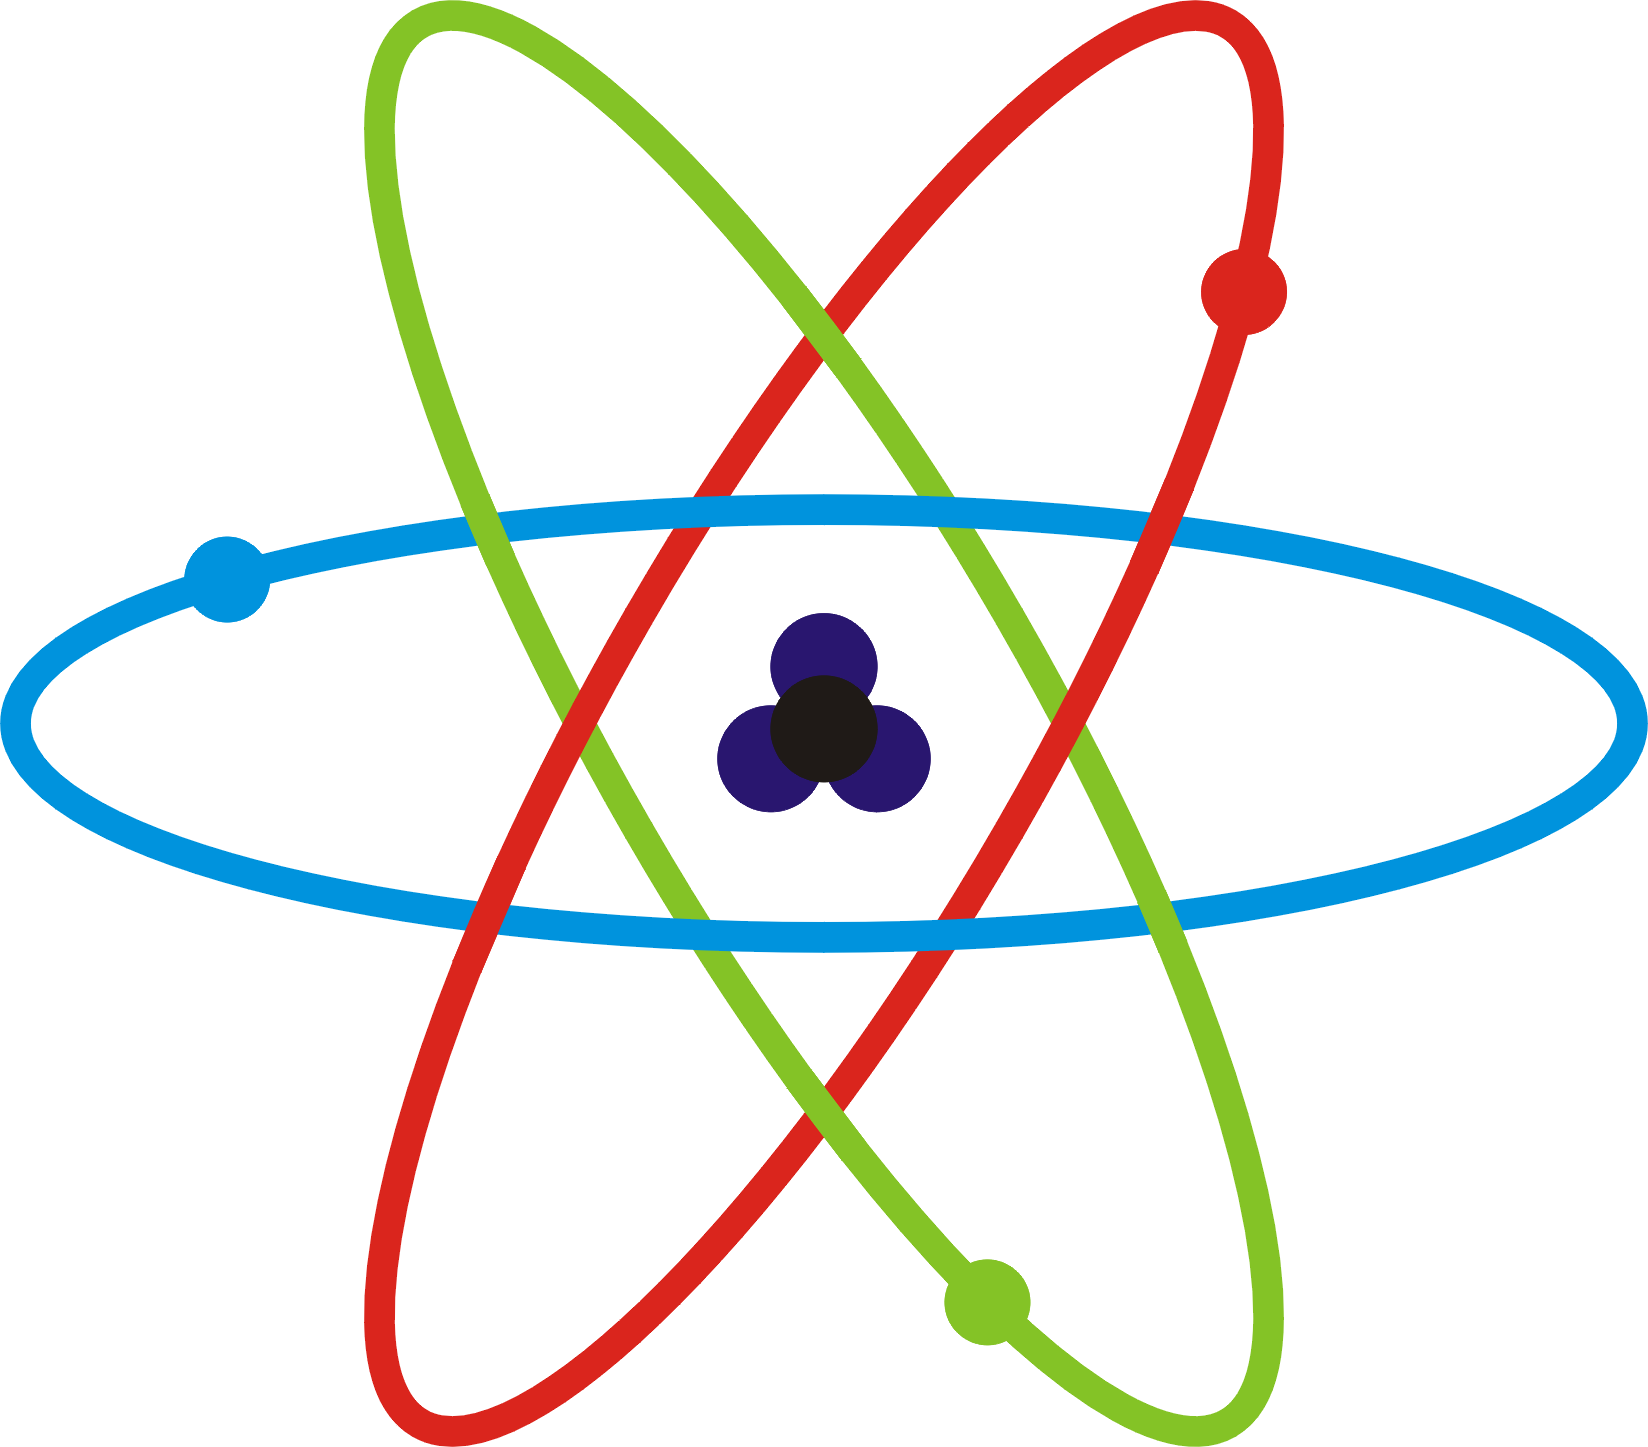  st century sources. Clipart science atom